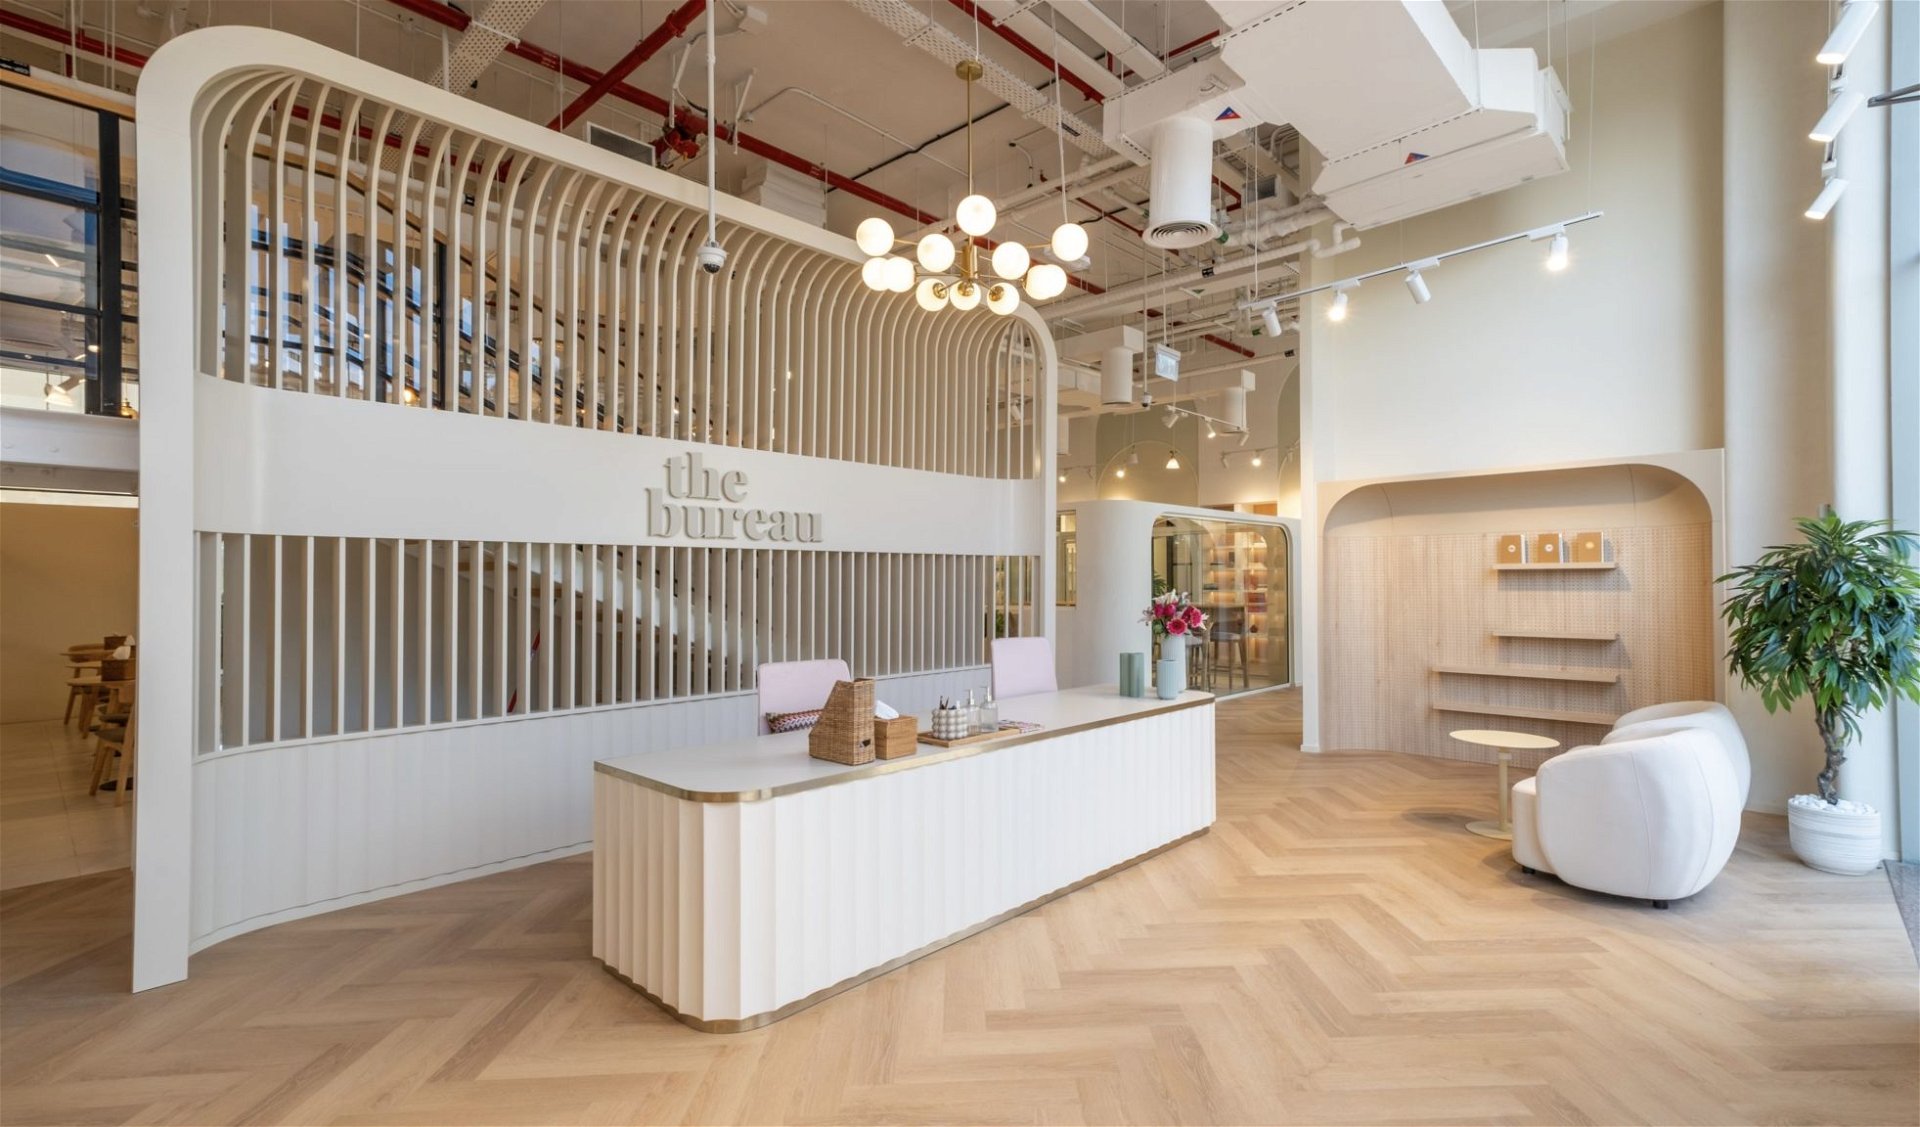 Leading premium office furniture brand, Vanta Black joins Love that Design